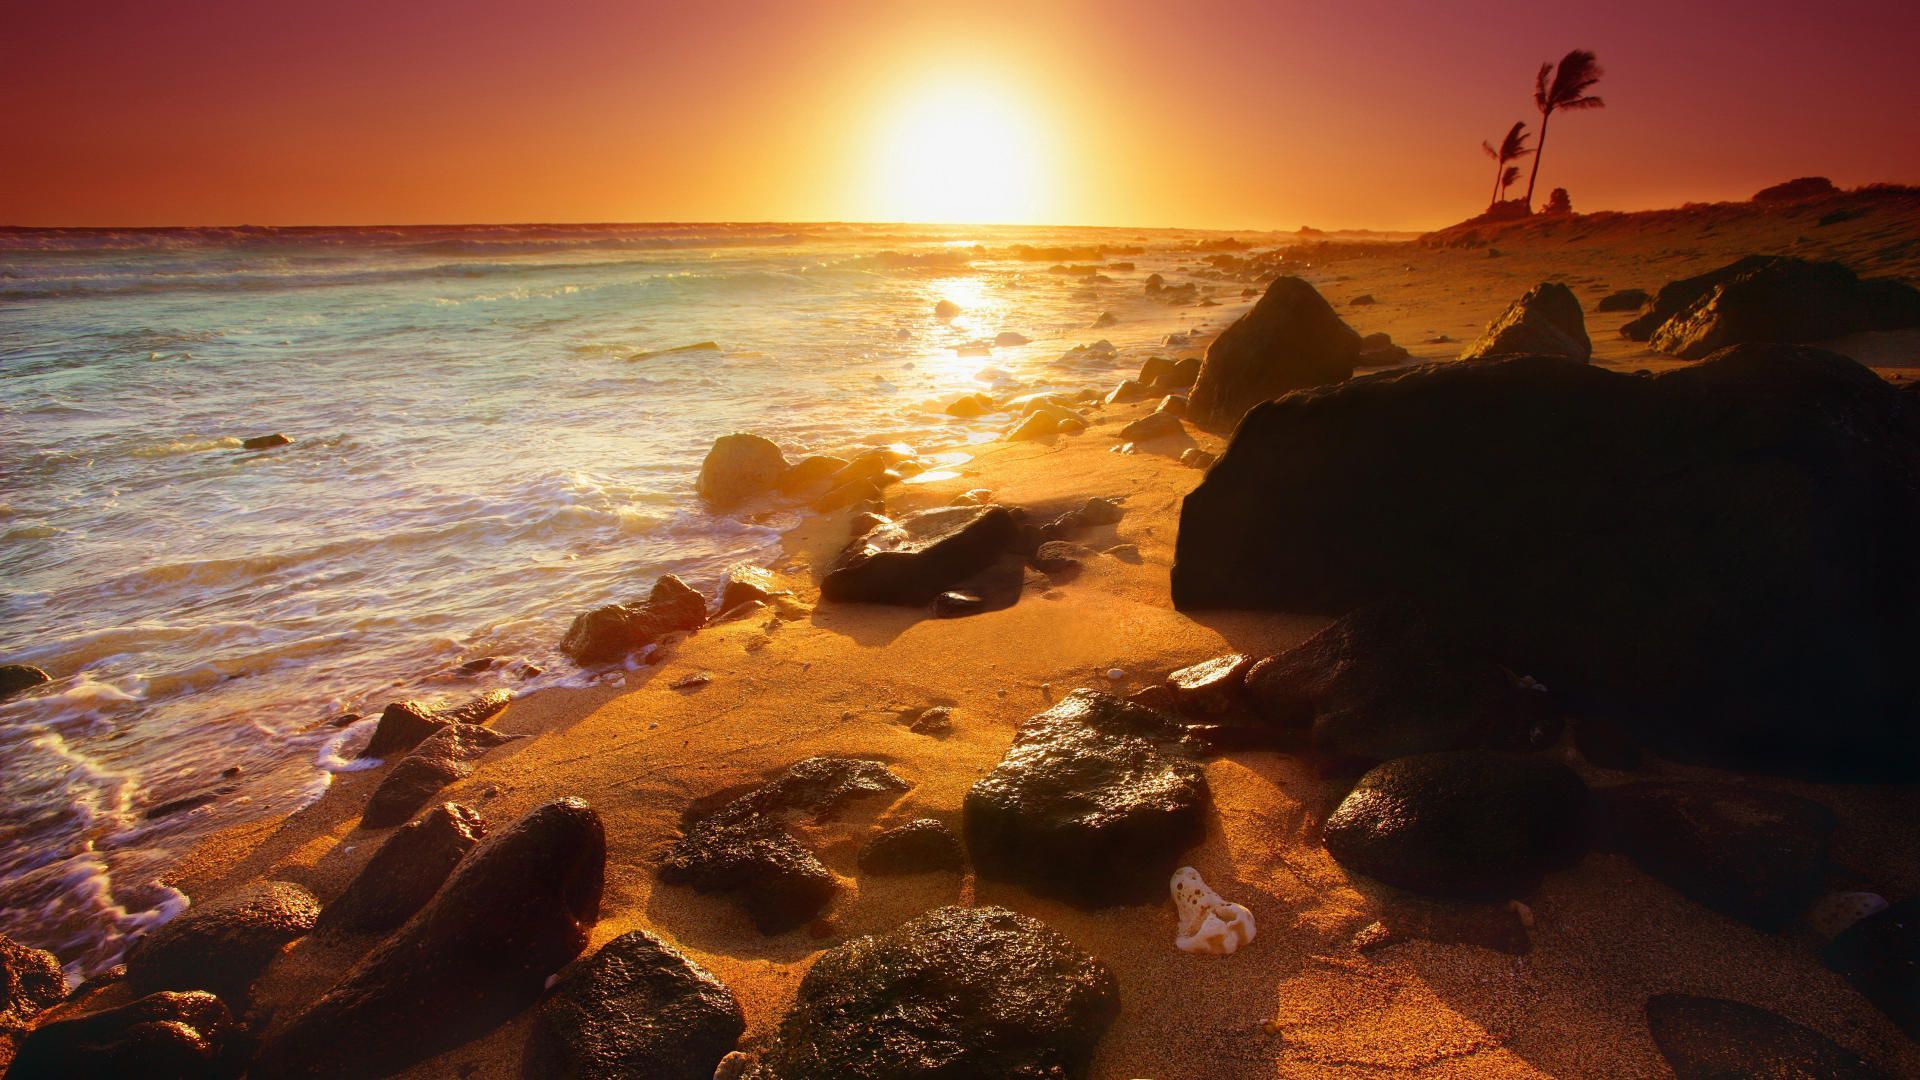 HD Quality Hawaii Sunset Beach Wallpaper HD 14 - SiWallpaper 9203